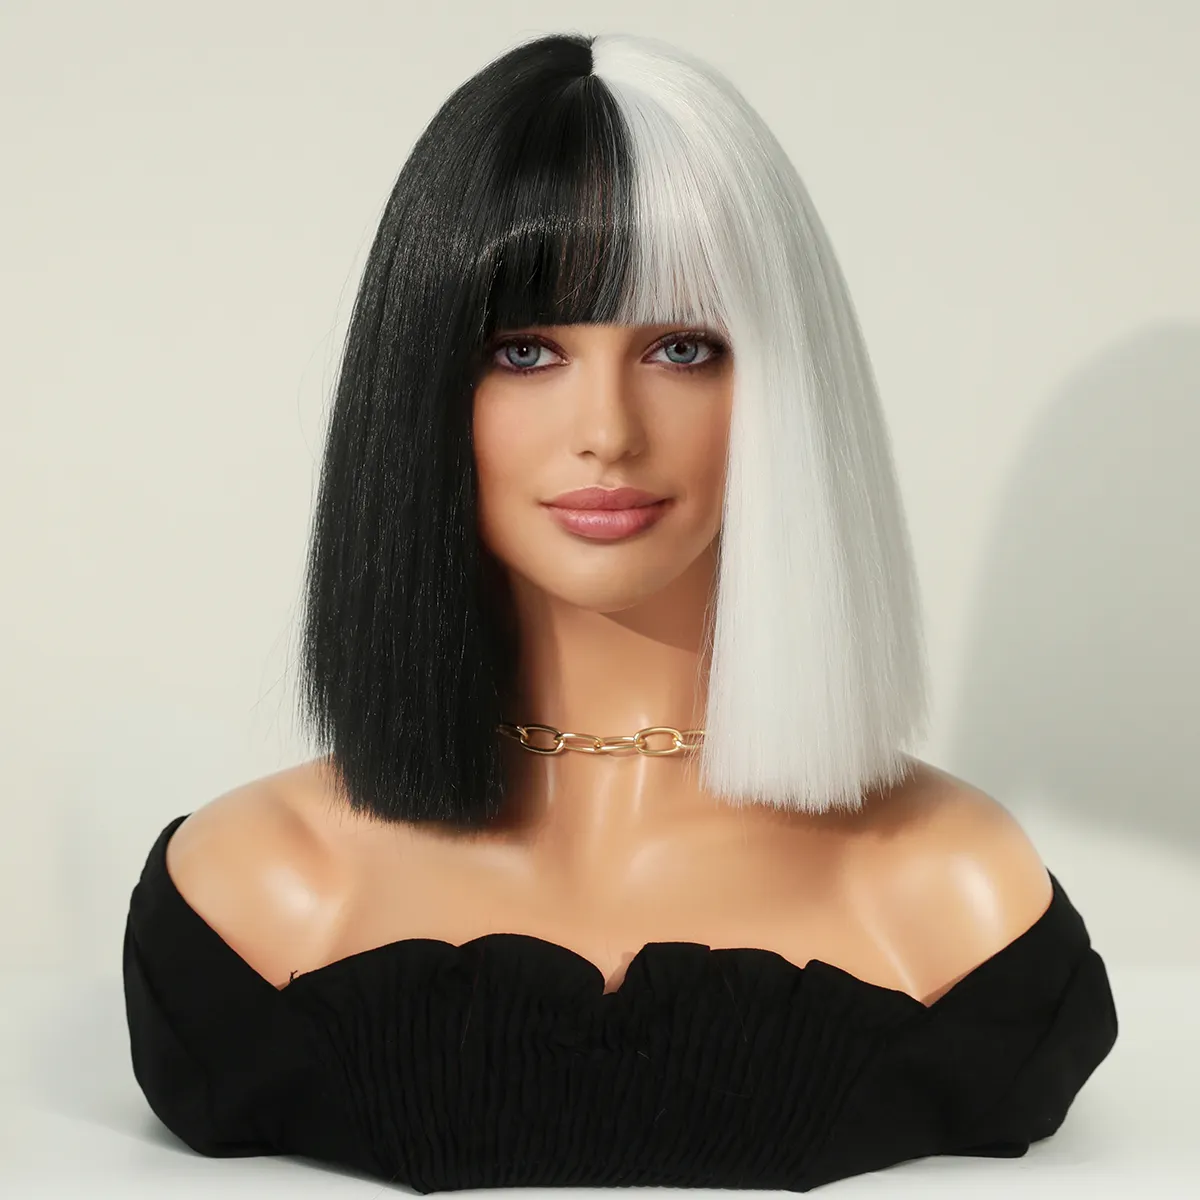 Cruella deville peruca com franja, preto e branco, bob, peruca de halloween, fantasia cosplay para mulheres, curta, cabelo reto